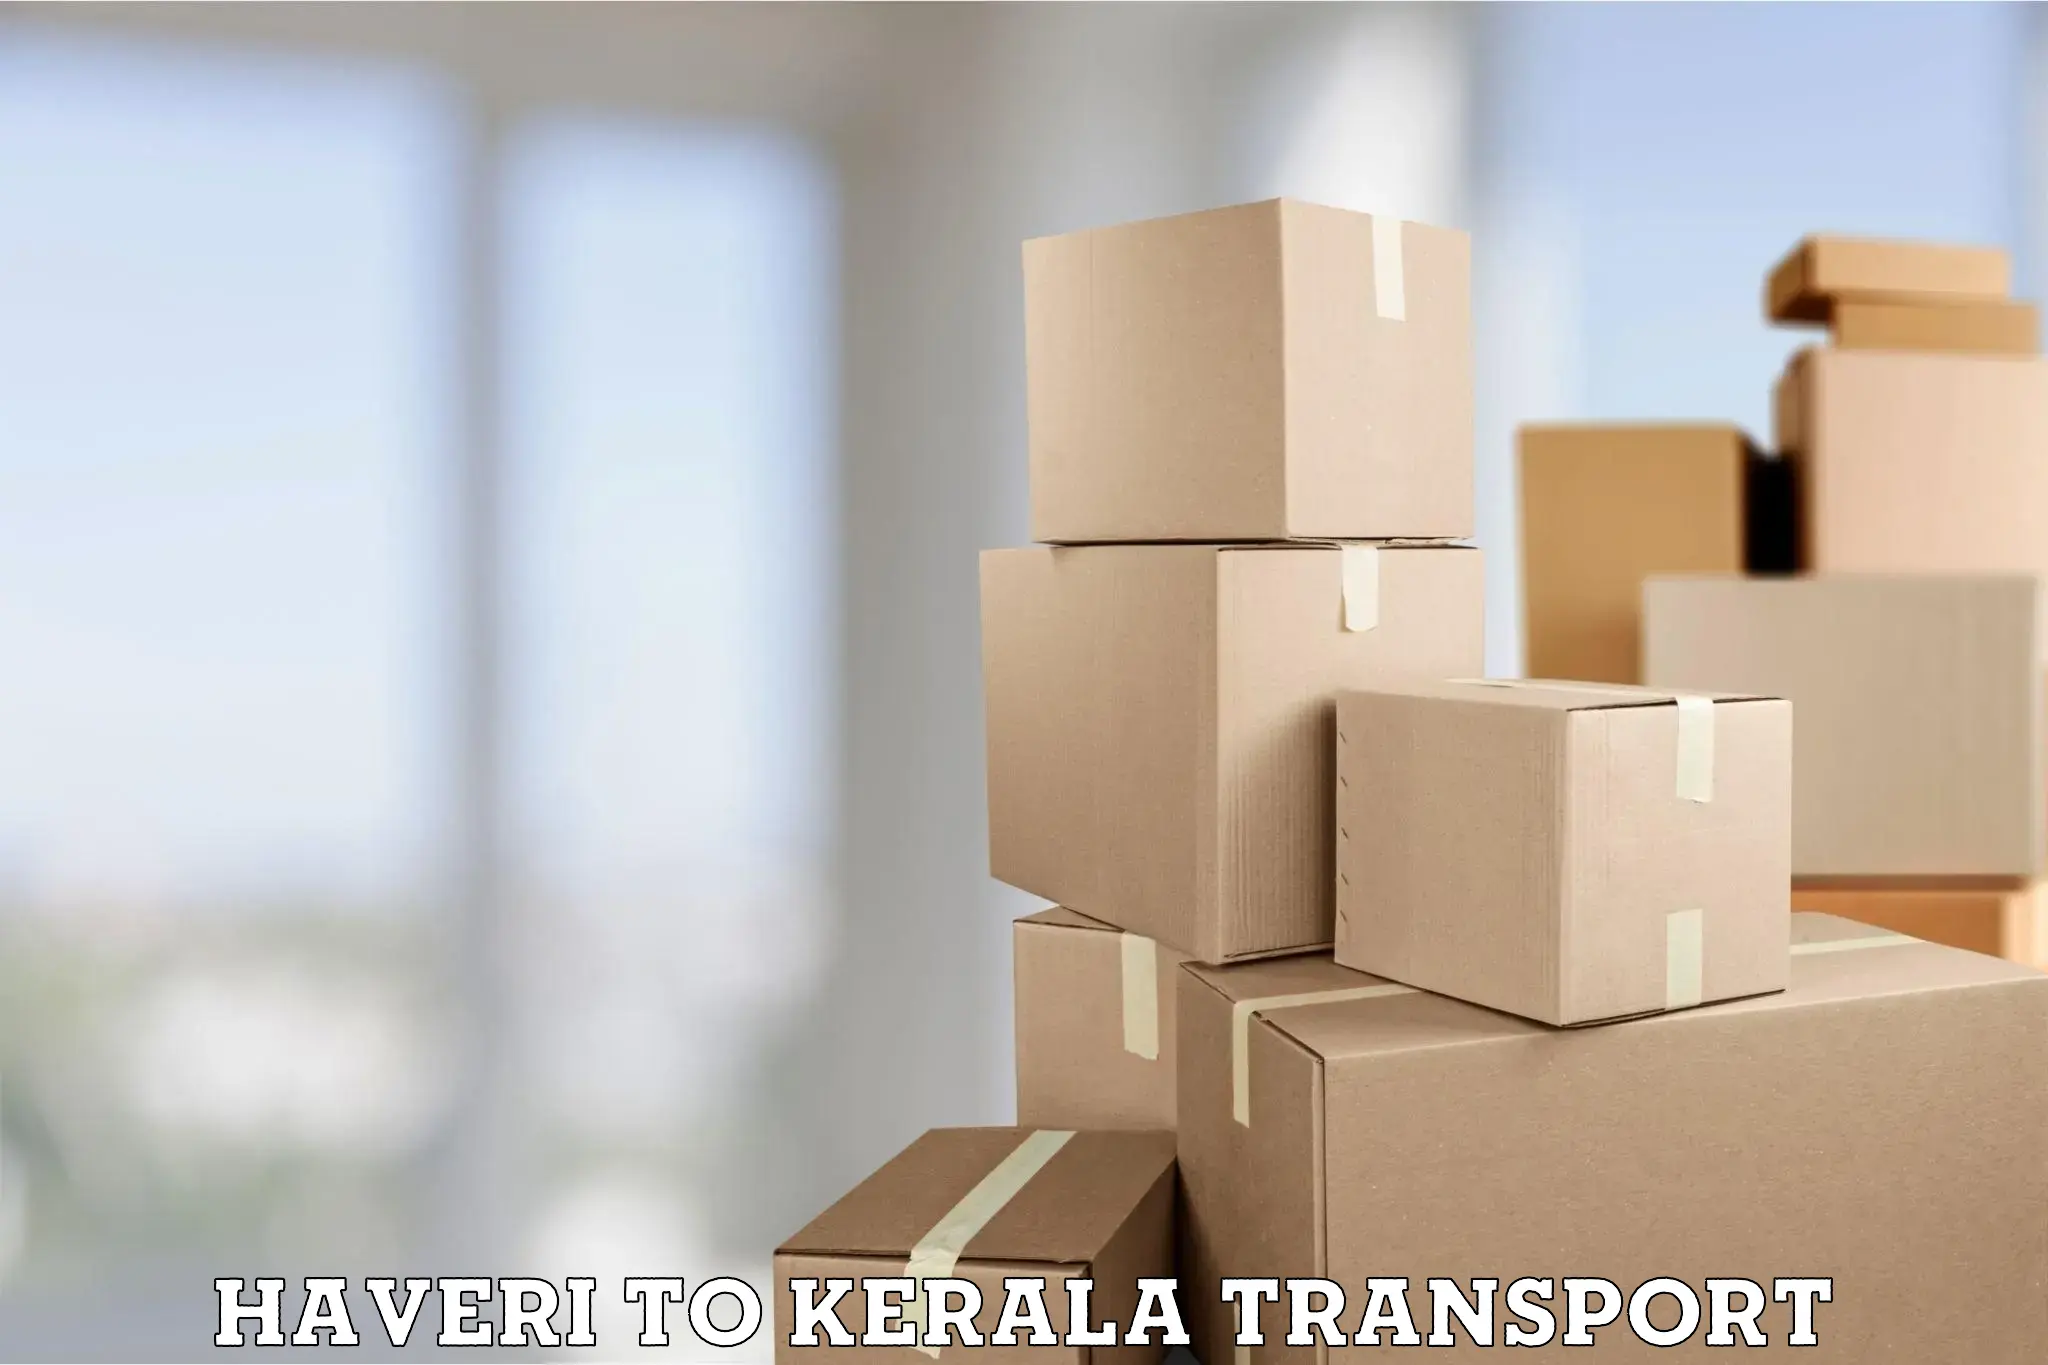 Commercial transport service Haveri to Kattappana